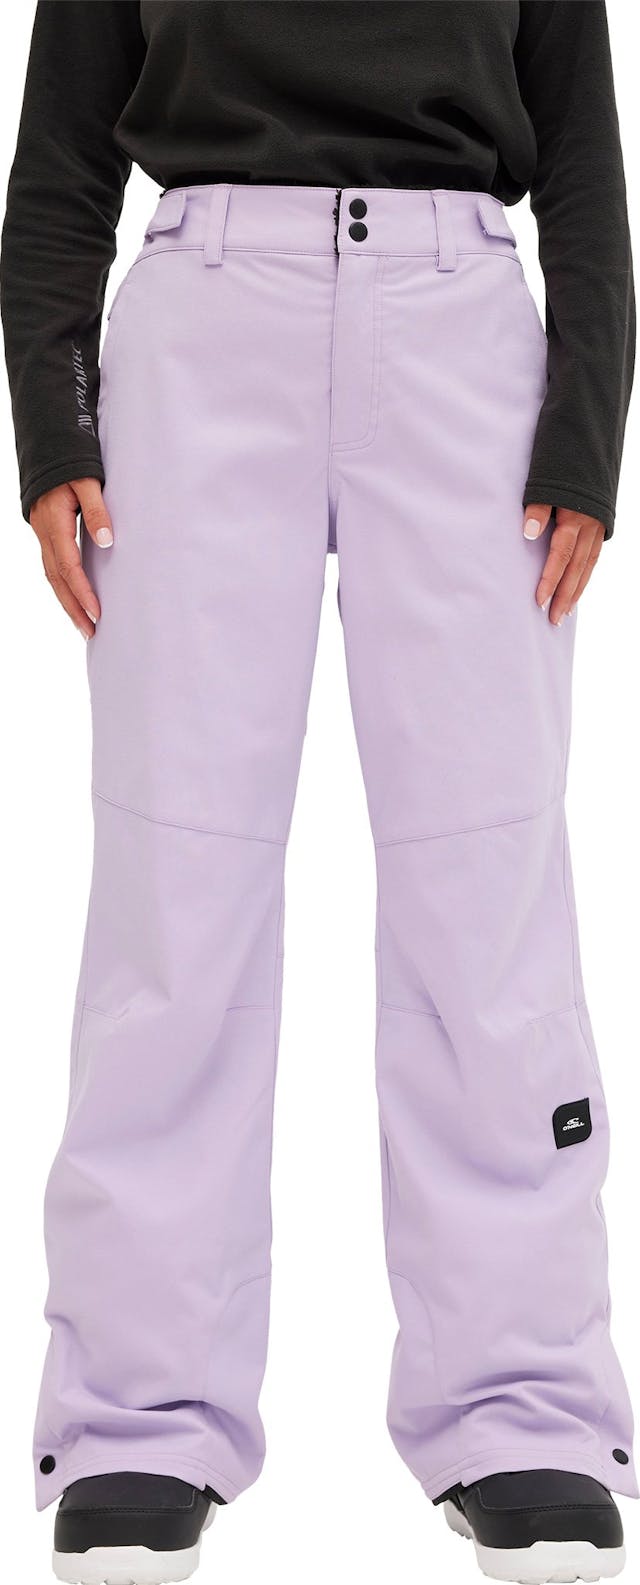 Product image for Star Melange Pants - Women's